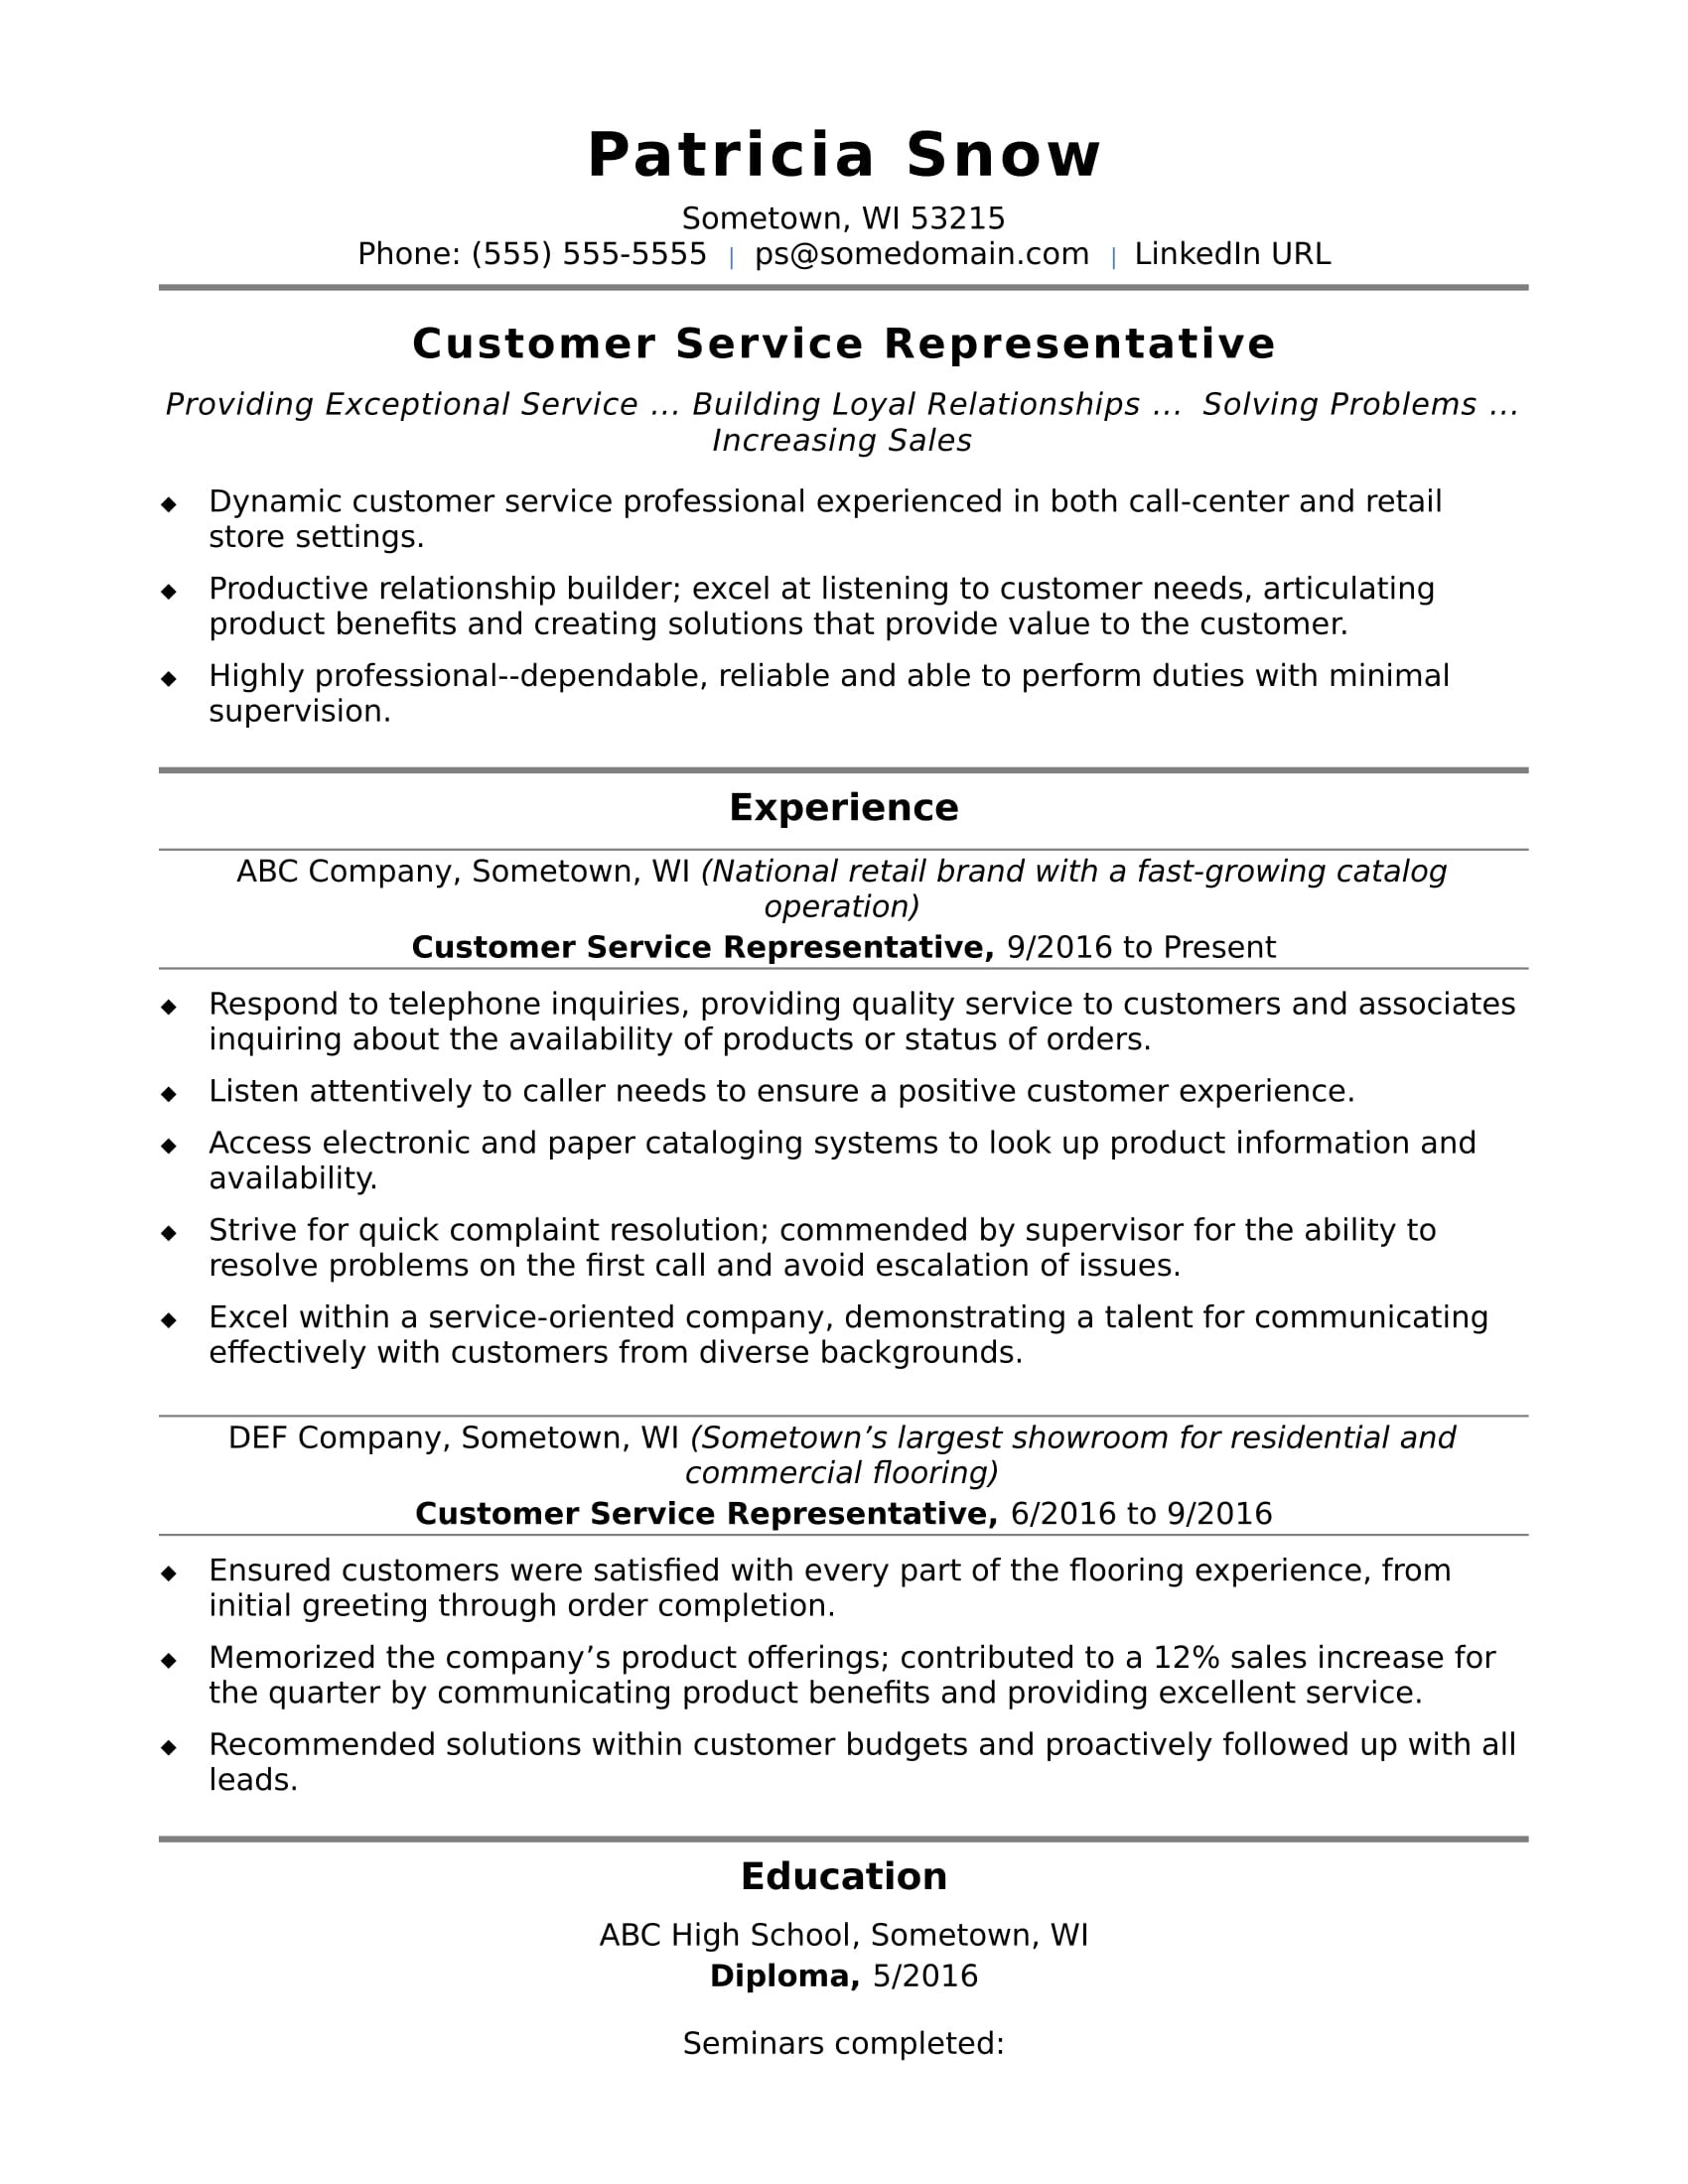 Sample Resume for Customer Relations Specialist Entry-level Customer Service Resume Sample Monster.com